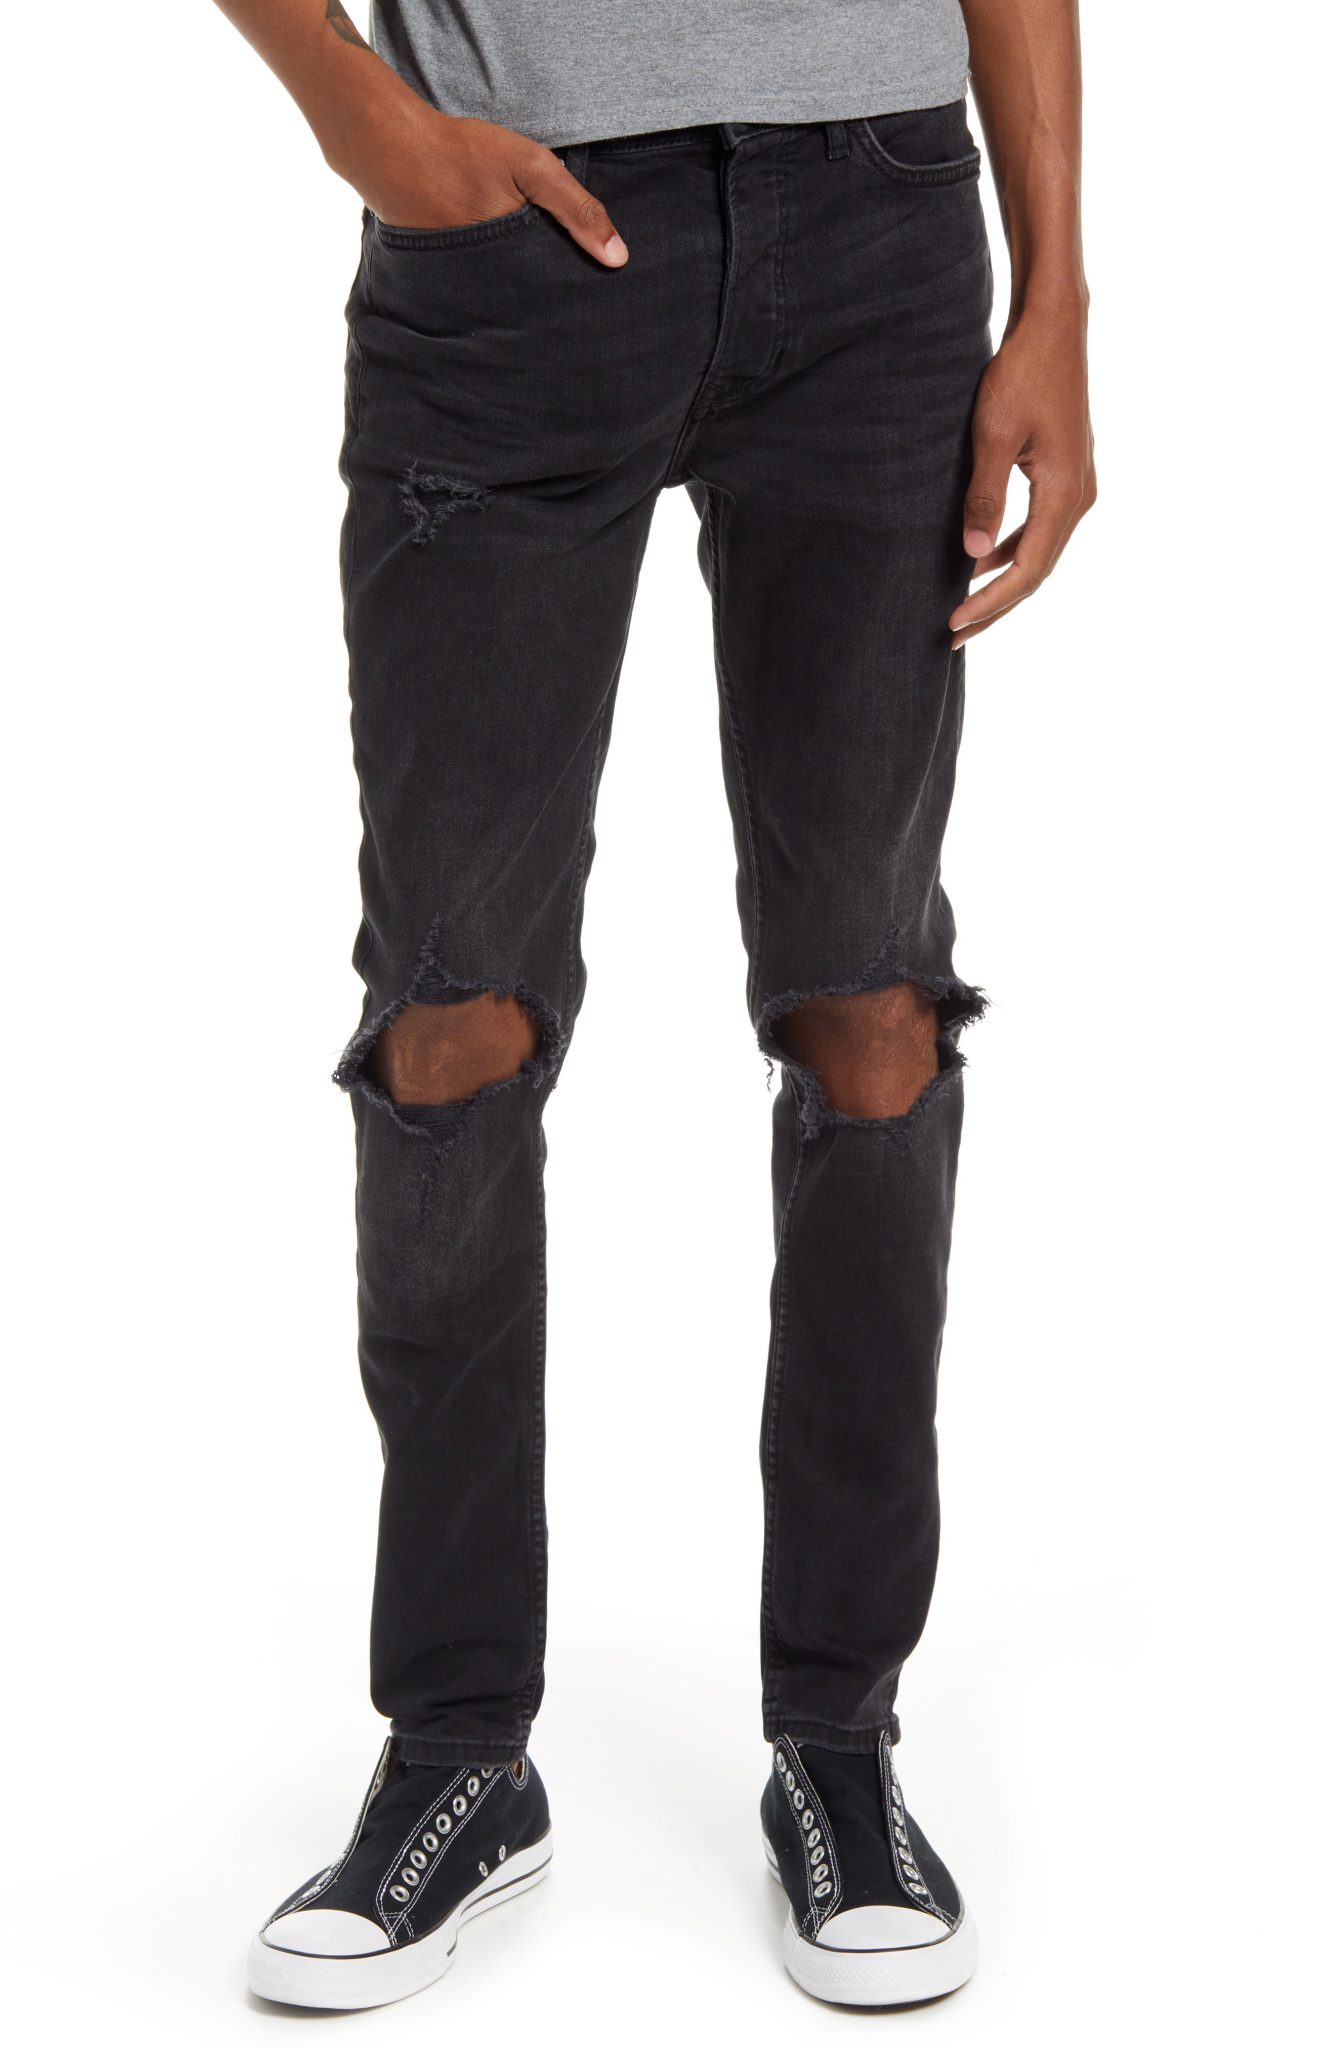 Men’s Topman Blowout Ripped Skinny Jeans, Size 30 x 30 - Black | The ...